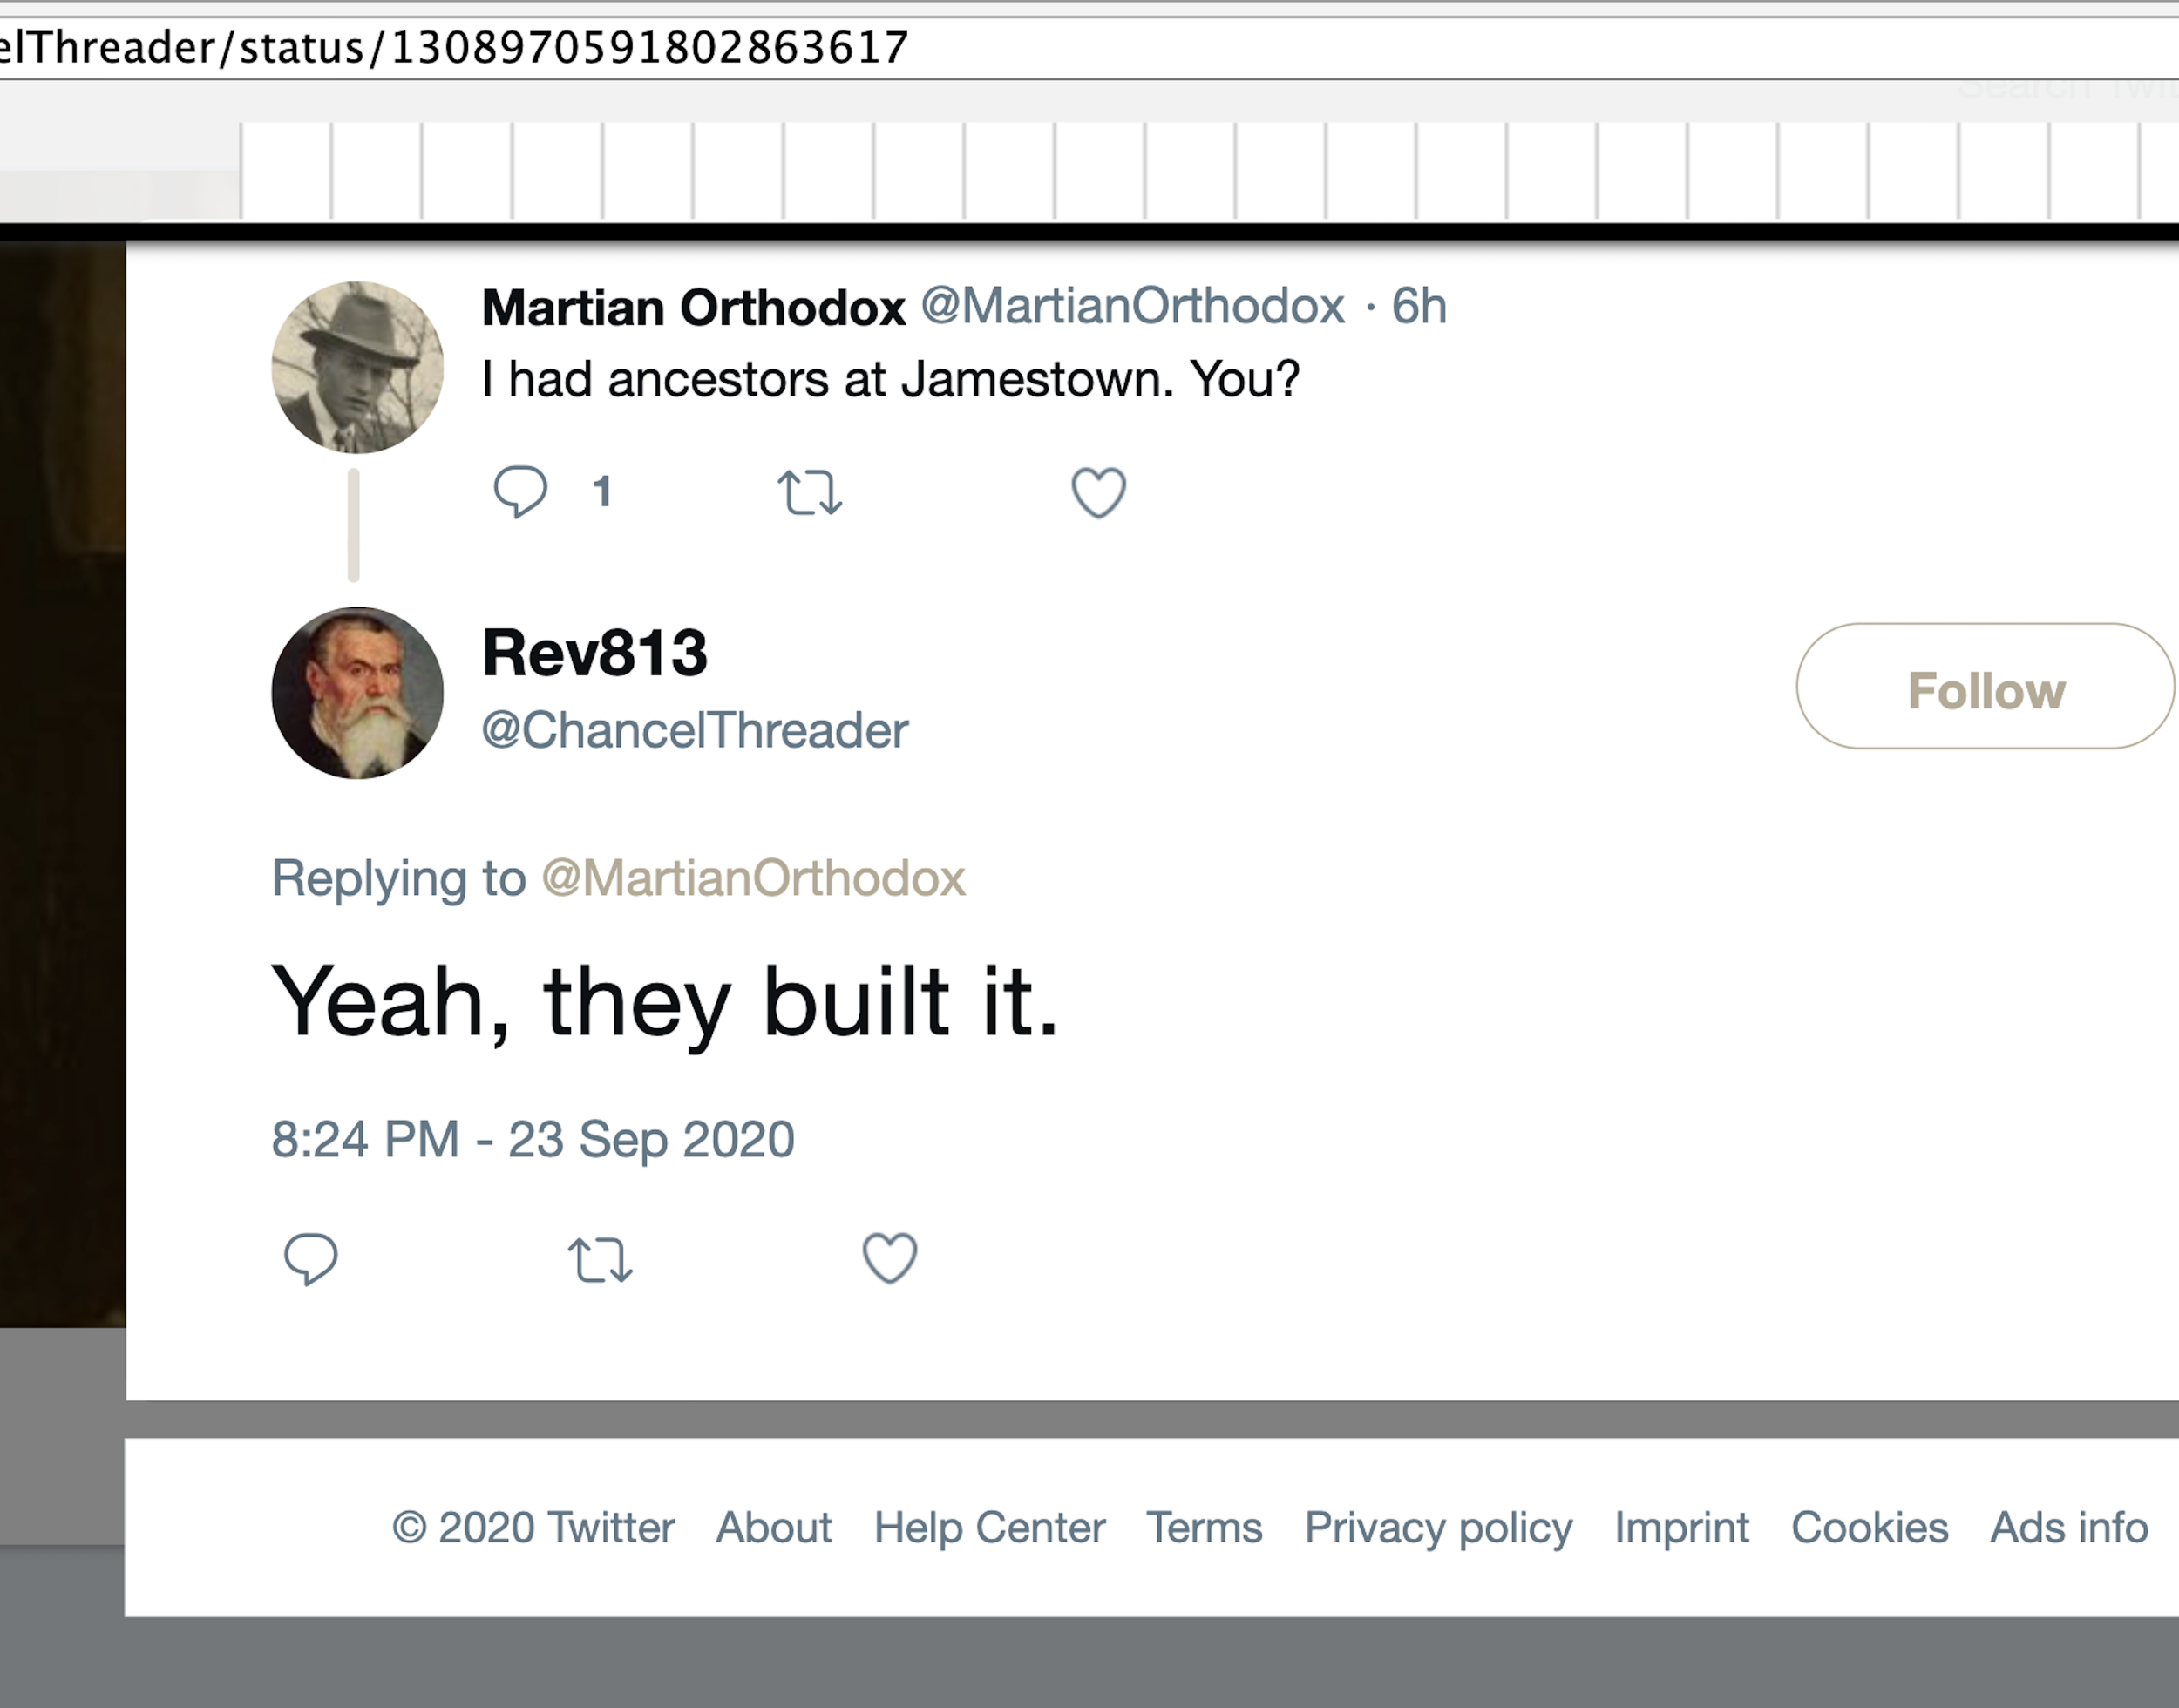 Woe saying his ancestors “built” Jamestown (on @ChancelThreader) in response to @MartianOrthodox saying, "I had ancestors at Jamestown. You?"